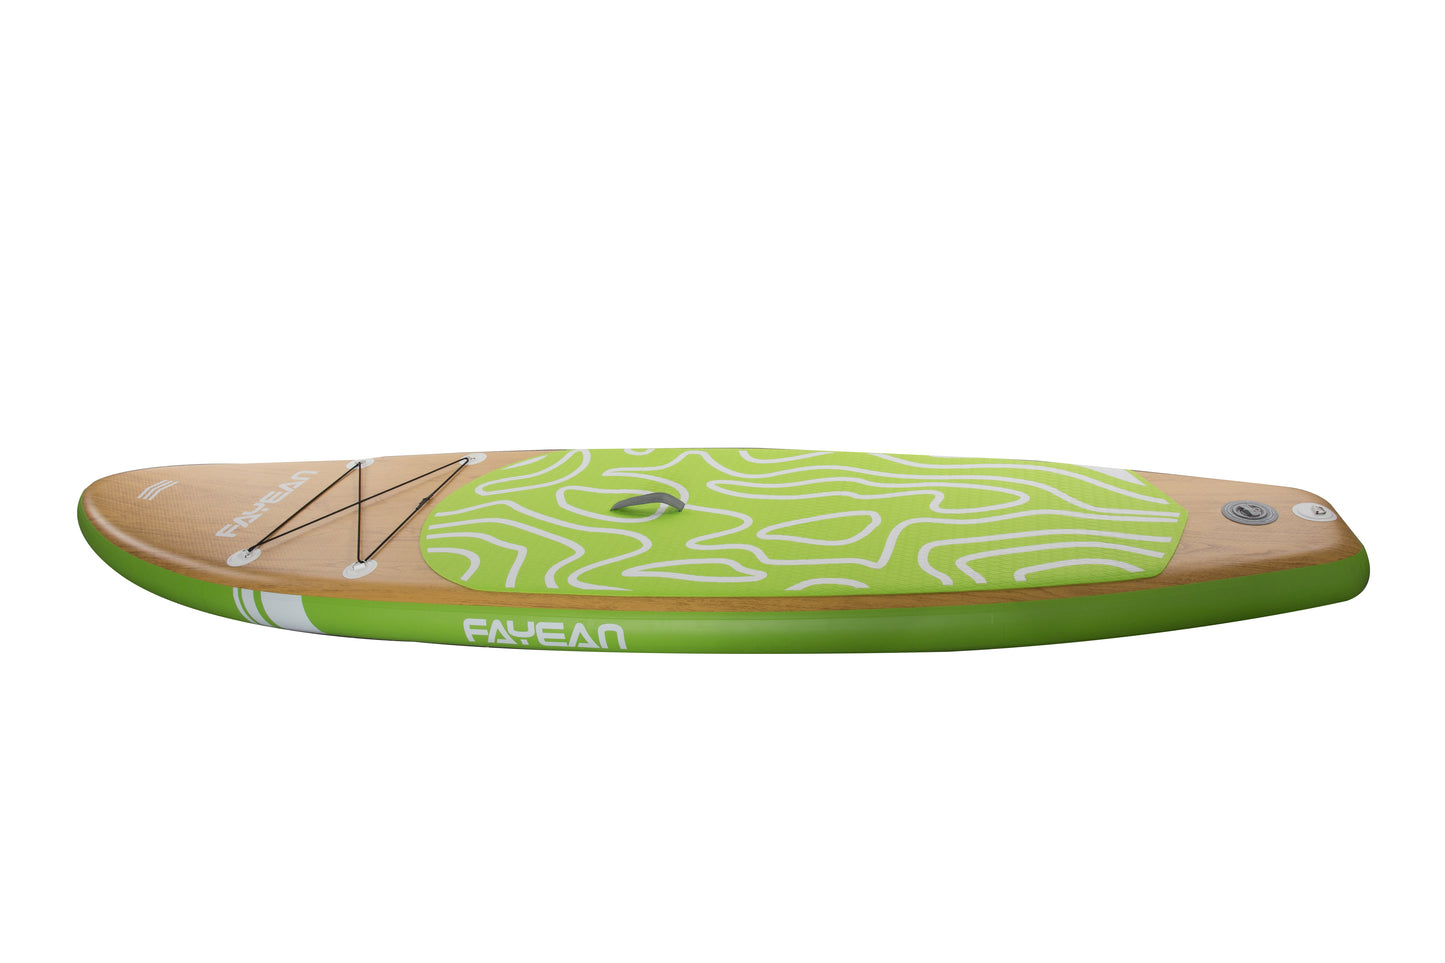 Tavola Bamboo Stand Up Paddle SUP Gonfiabile 10'6"